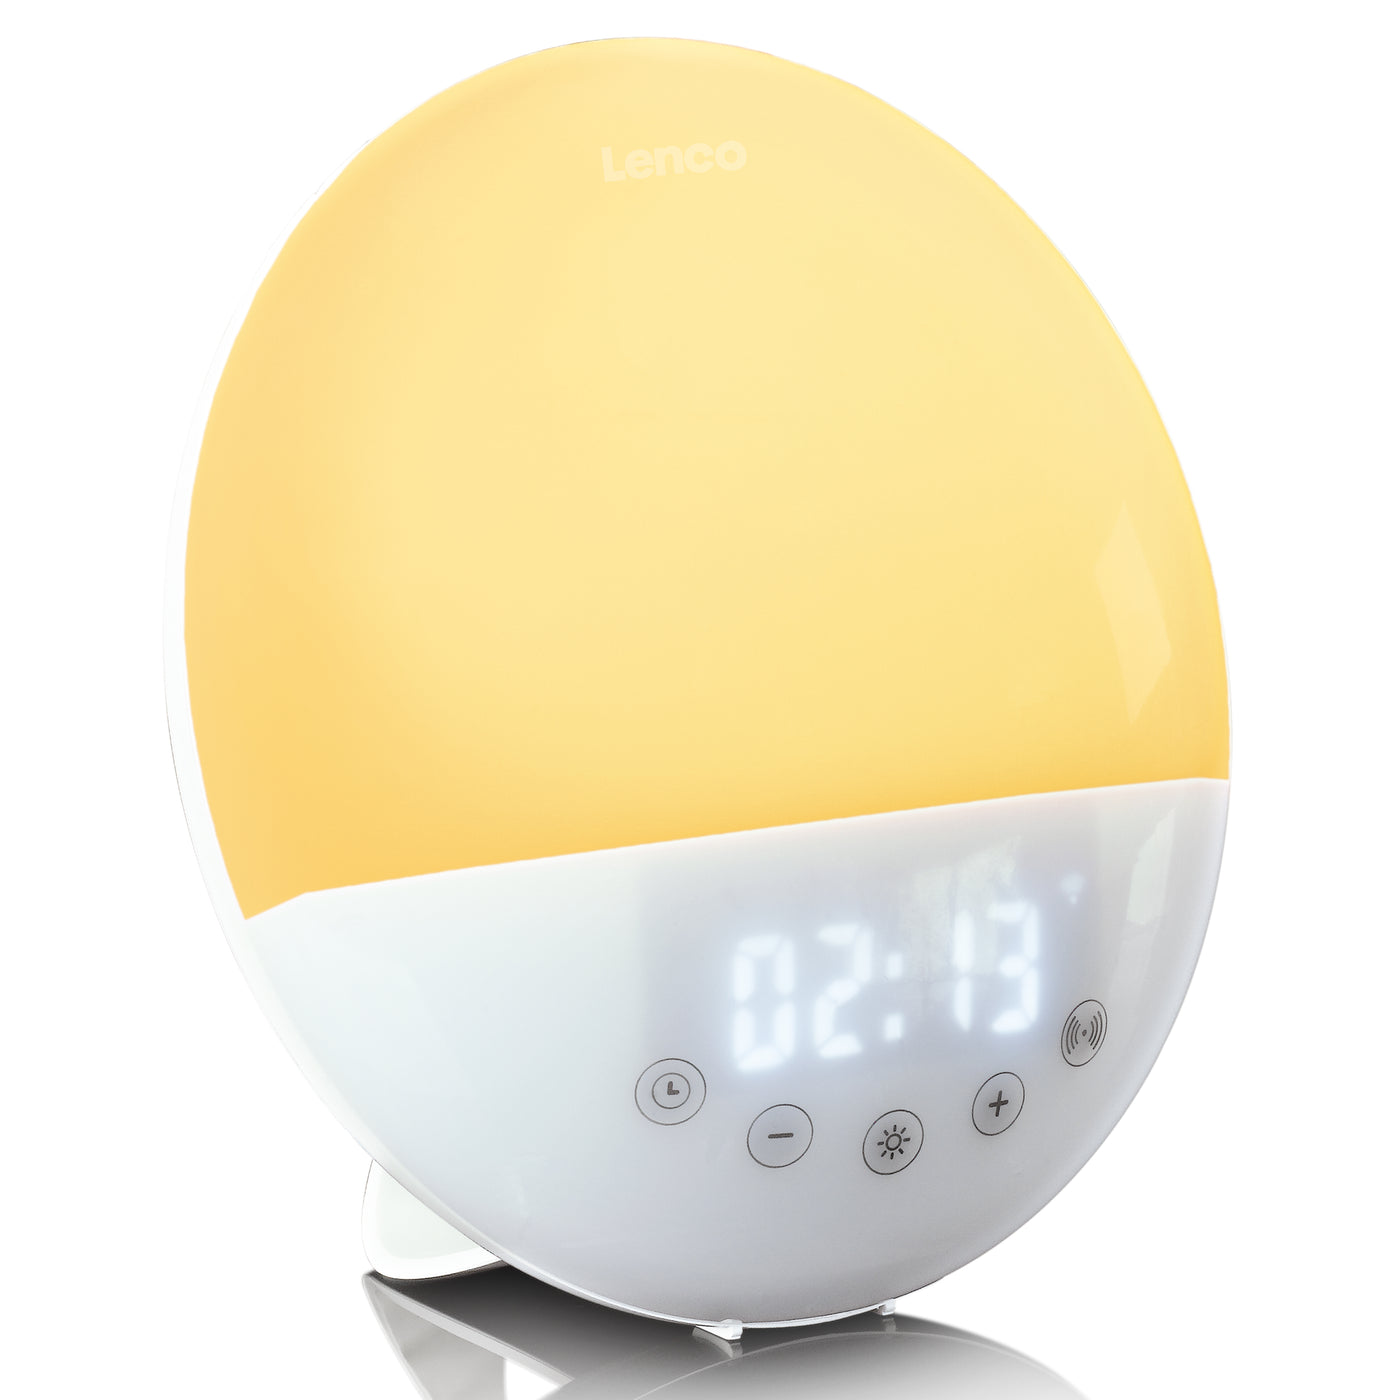 LENCO CRW-110WH - Smart clock radio with wake up light - Multi colour